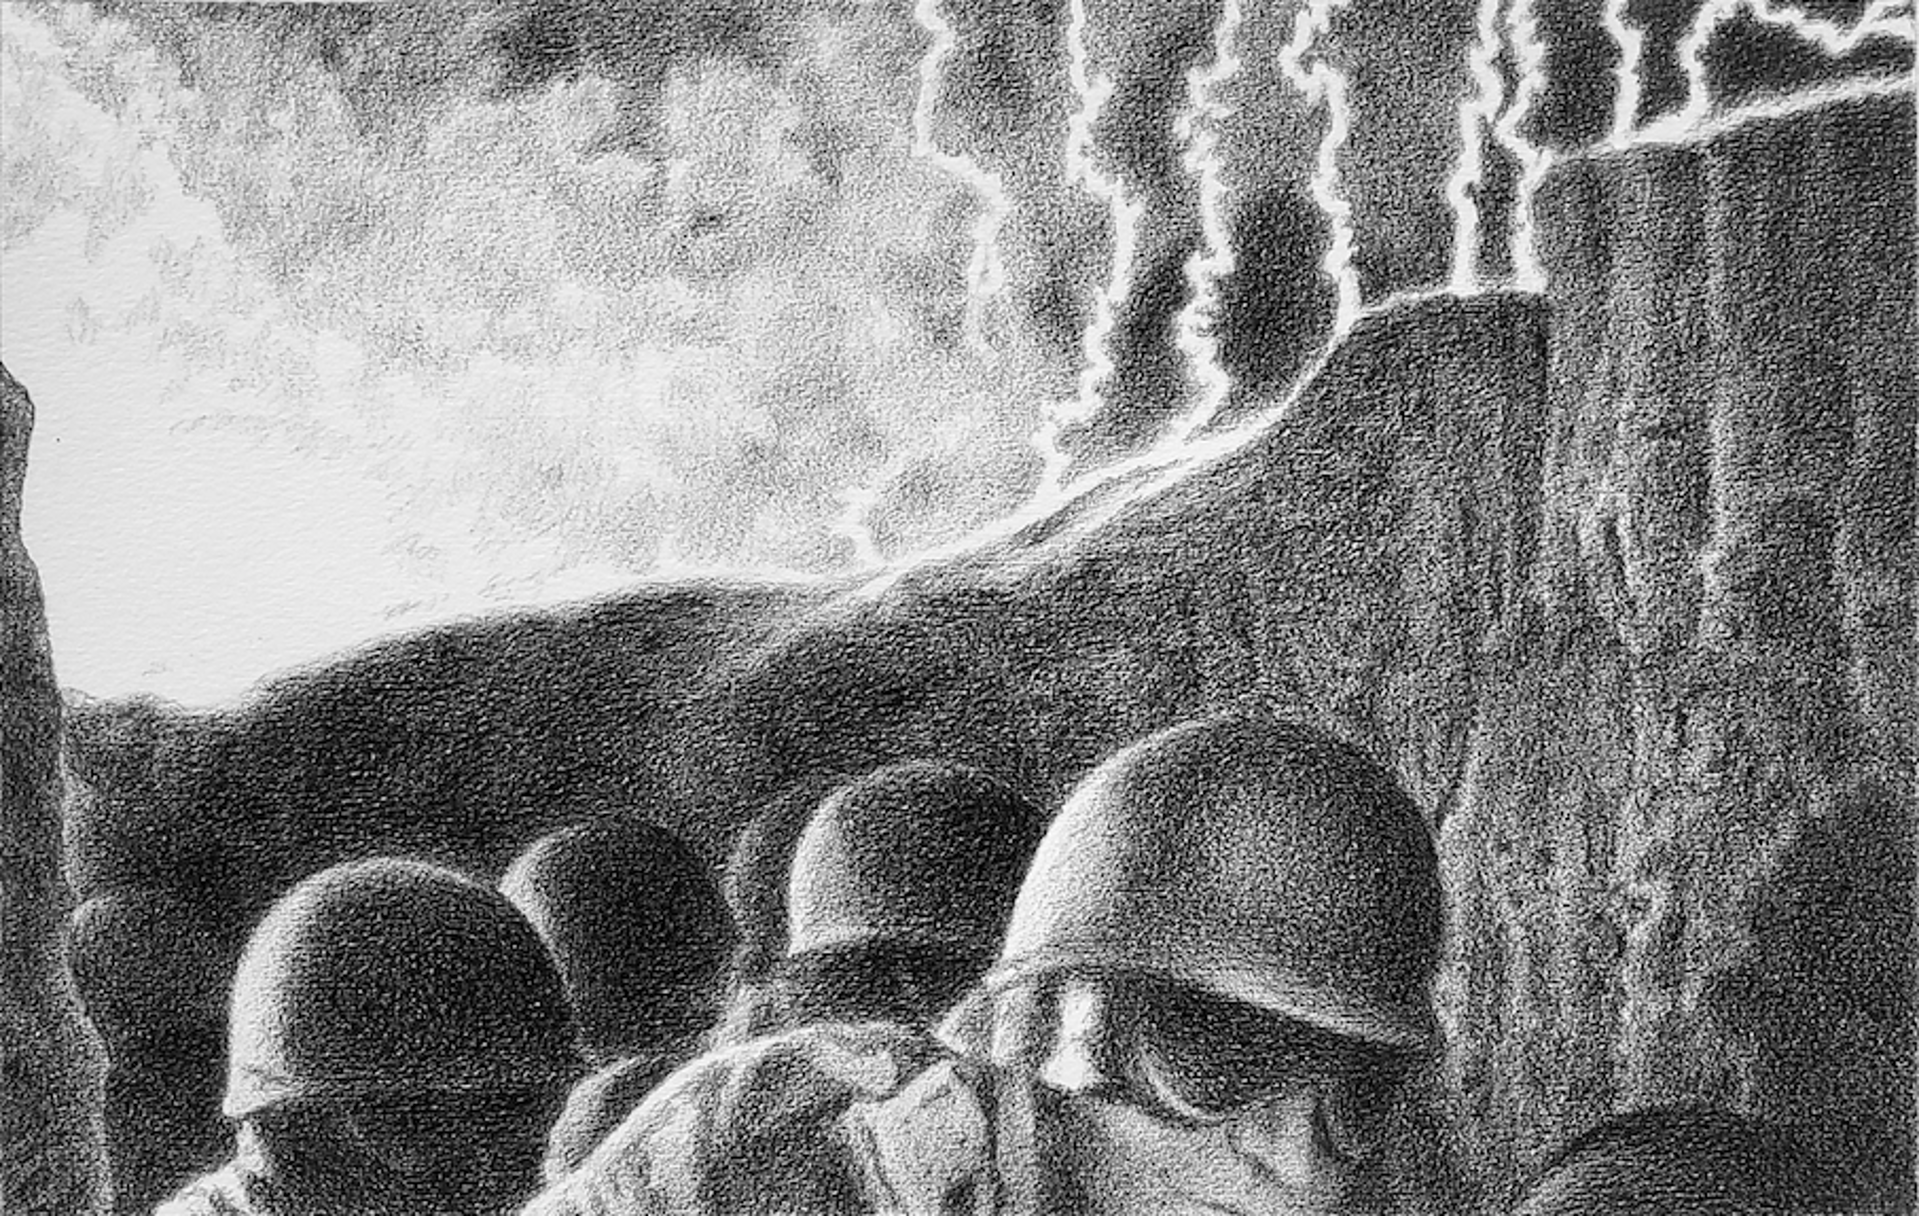 Atomic Veterans by Neva Mikulicz